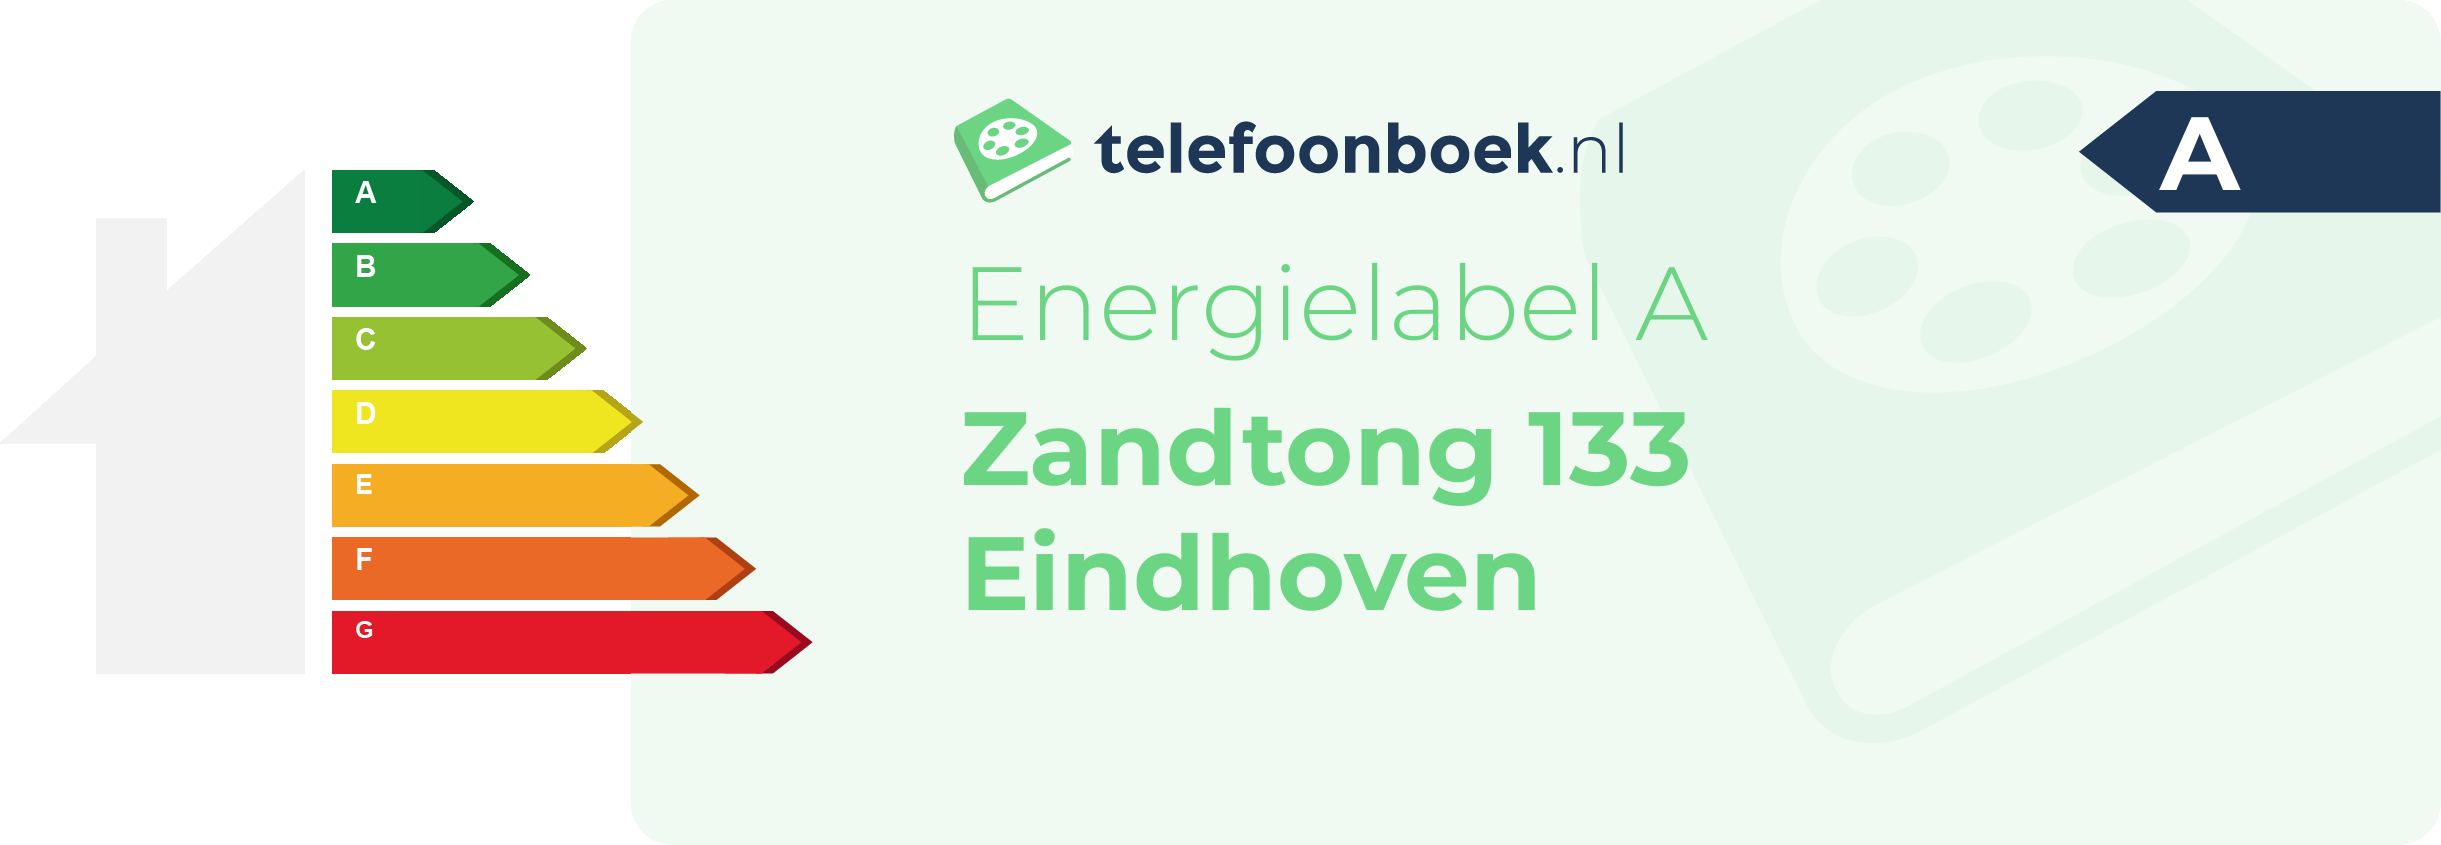 Energielabel Zandtong 133 Eindhoven